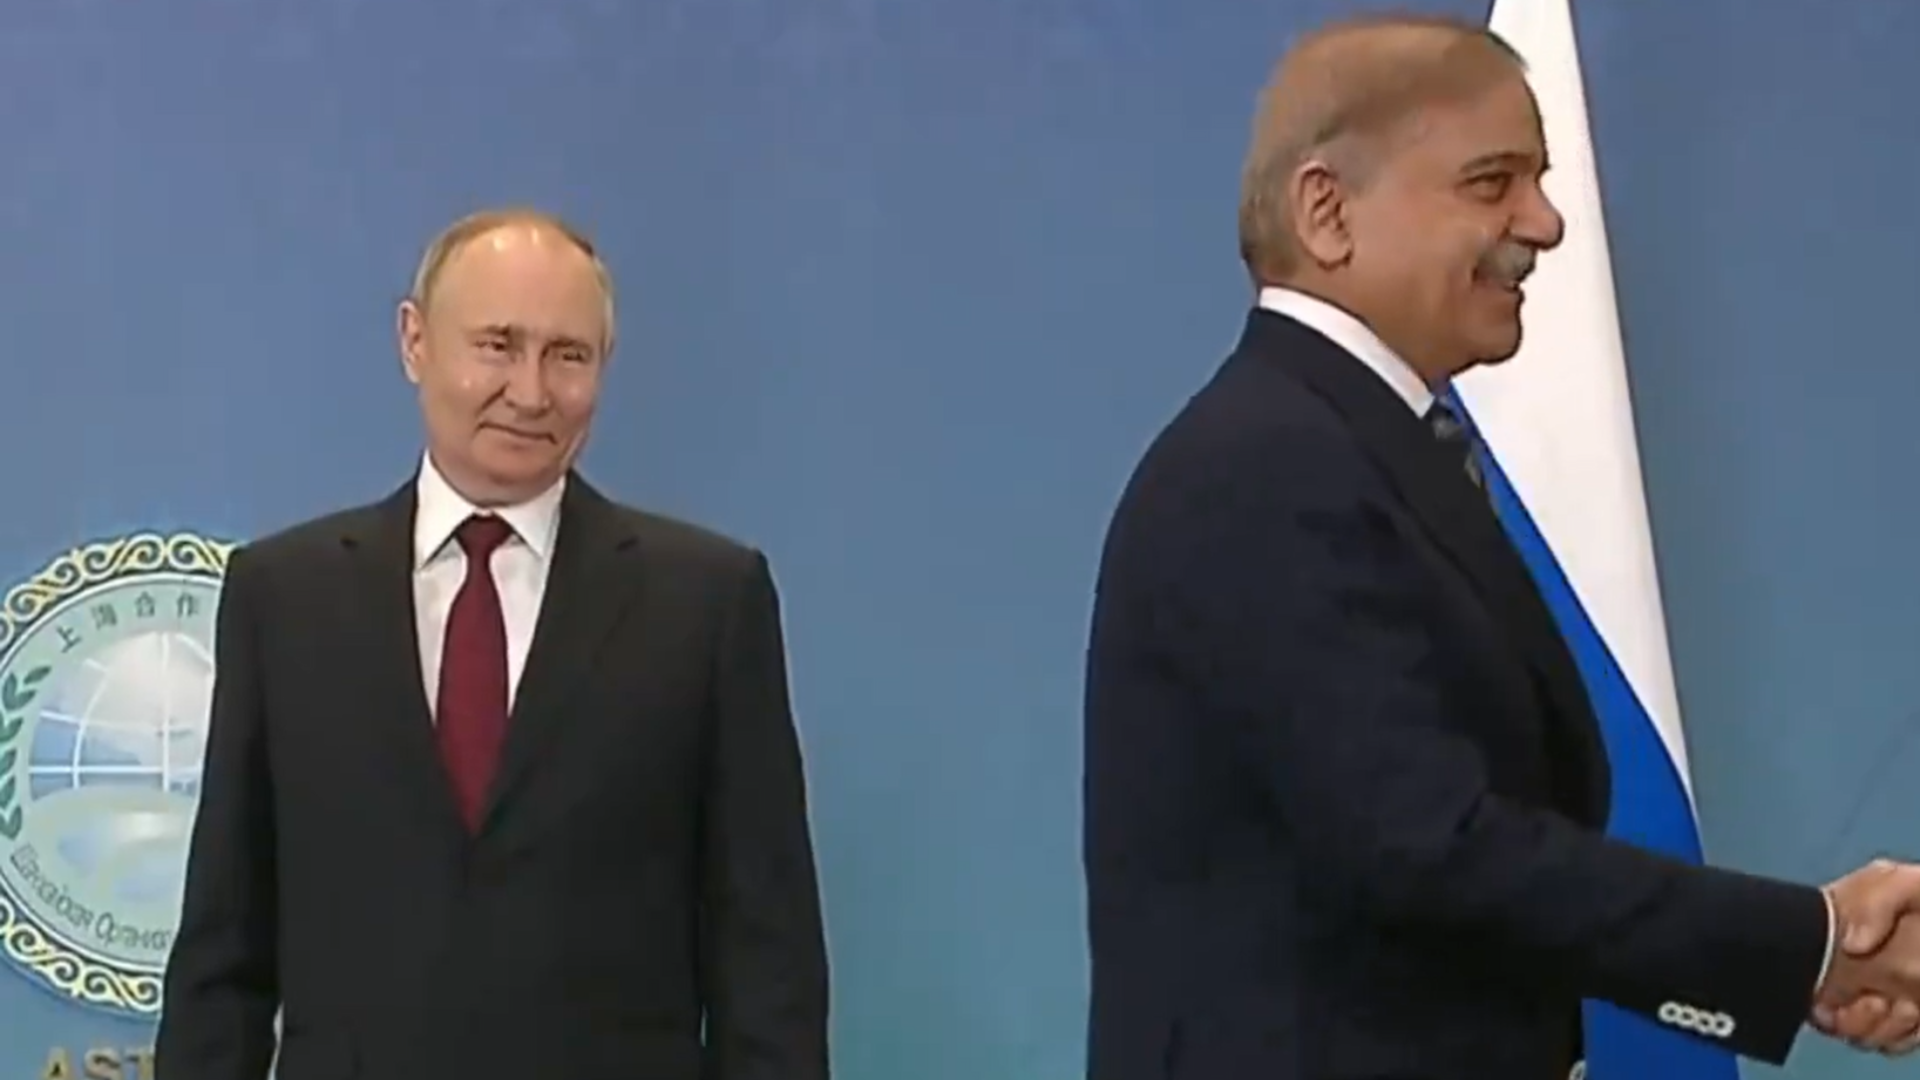 SCO Summit: Pakistan PM Sharif’s Awkward Exchange With Putin